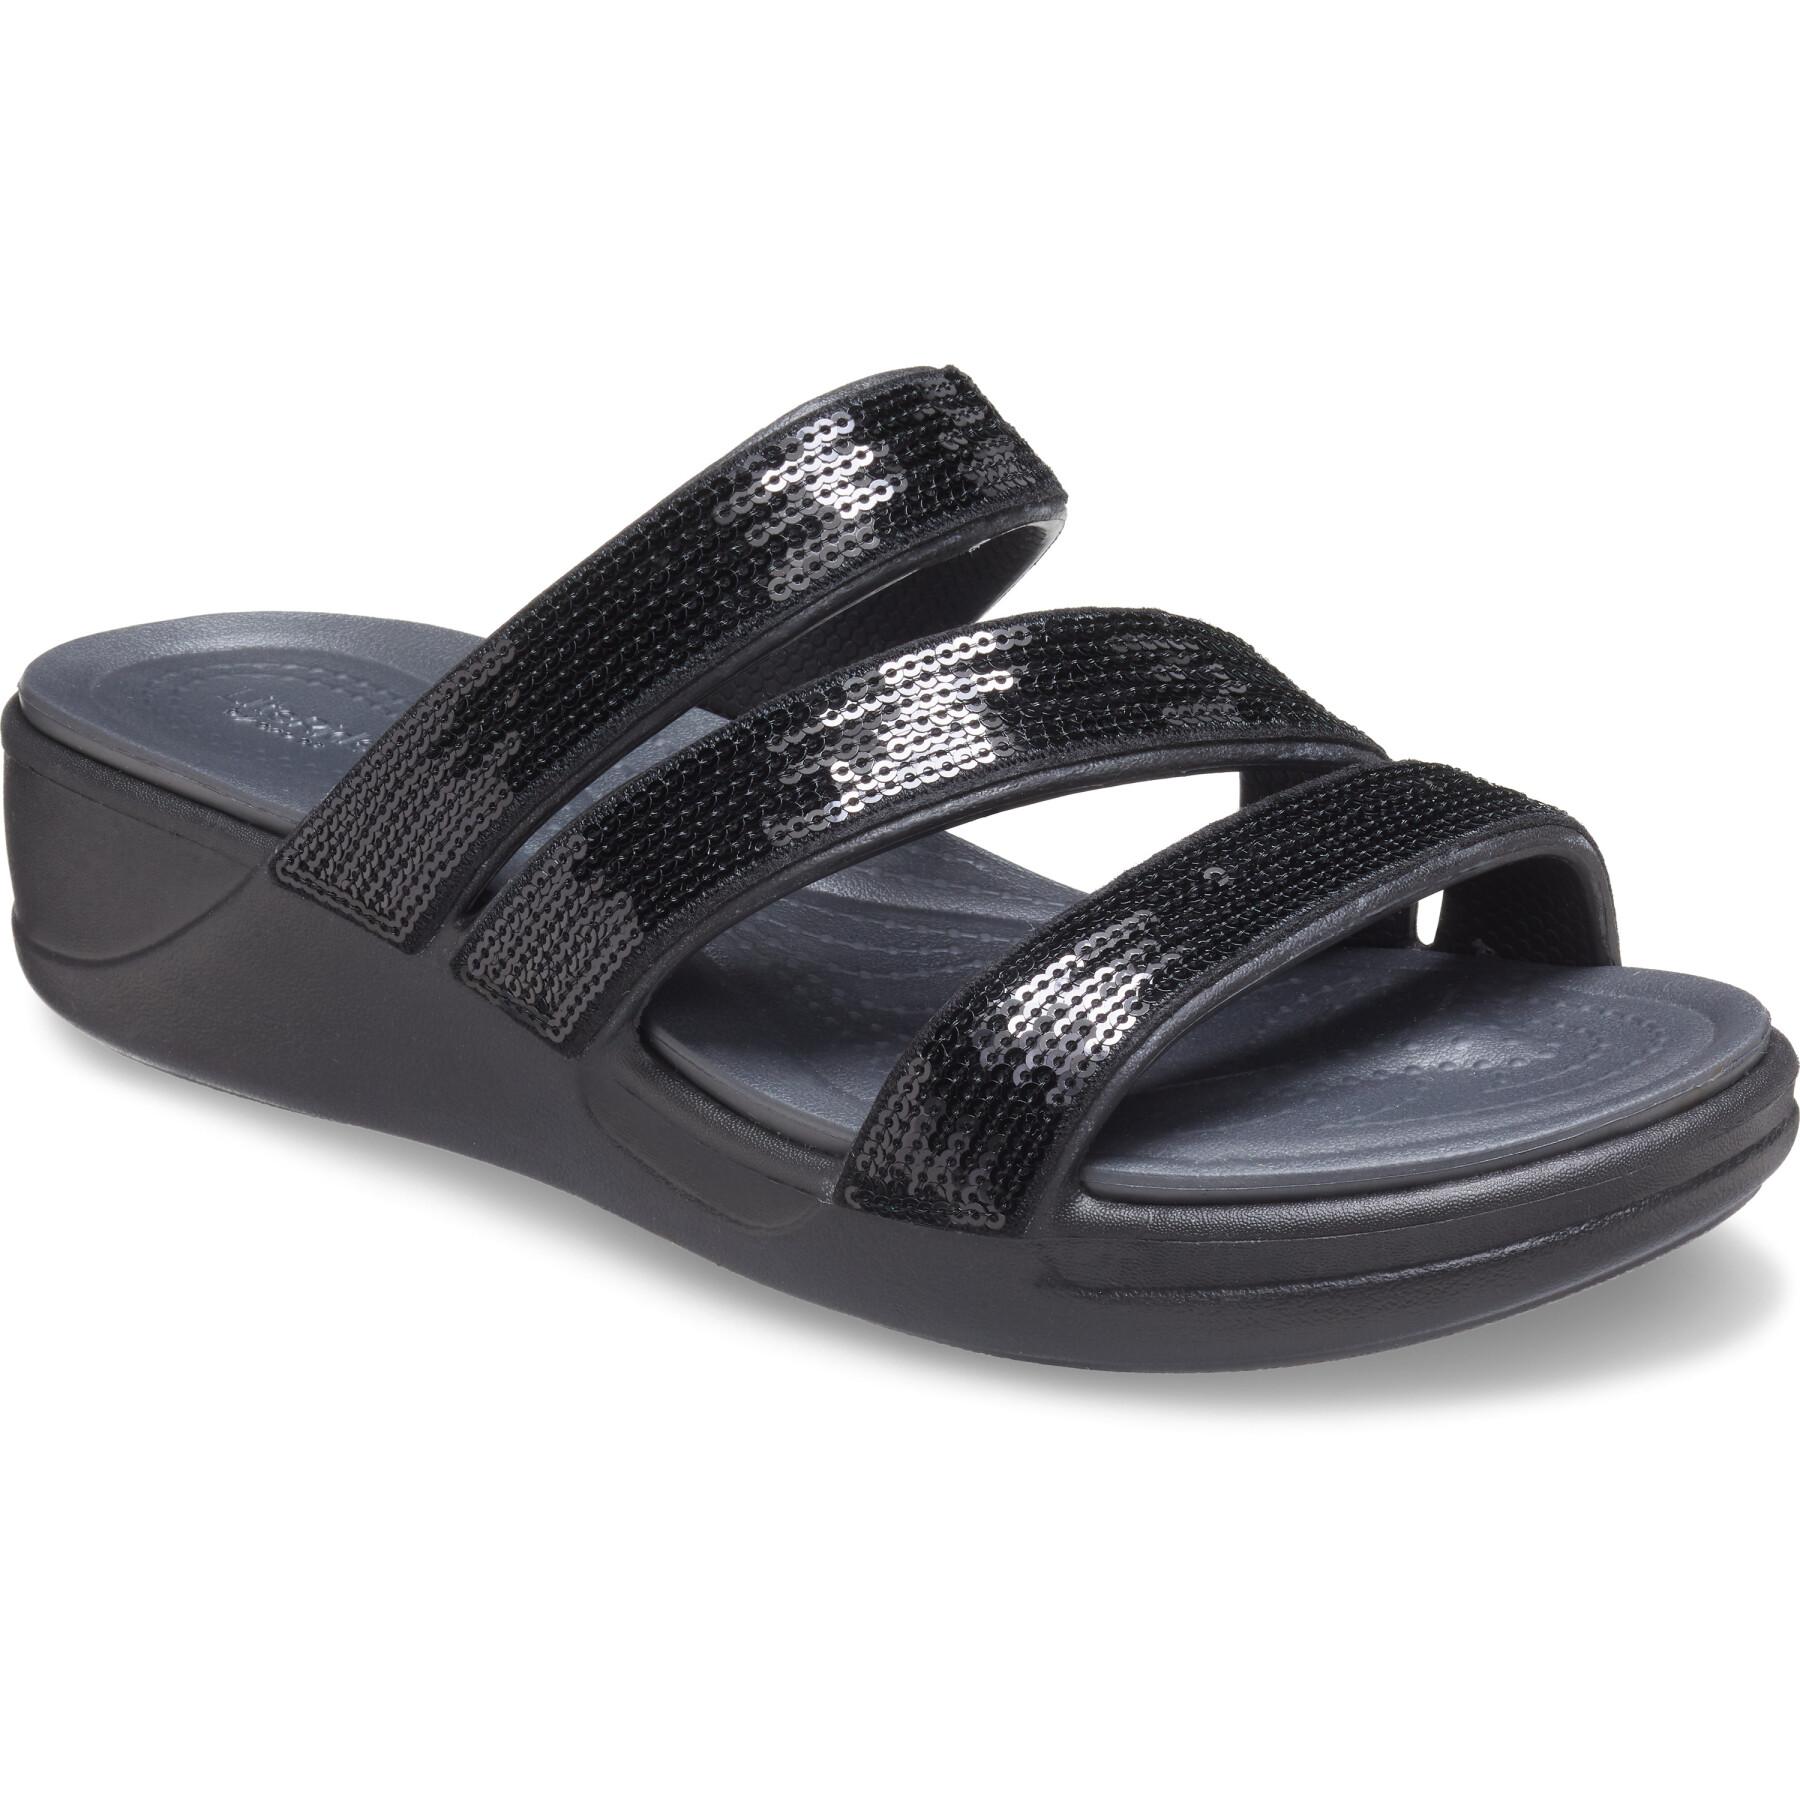 Women's sandals Crocs Boca Strappy